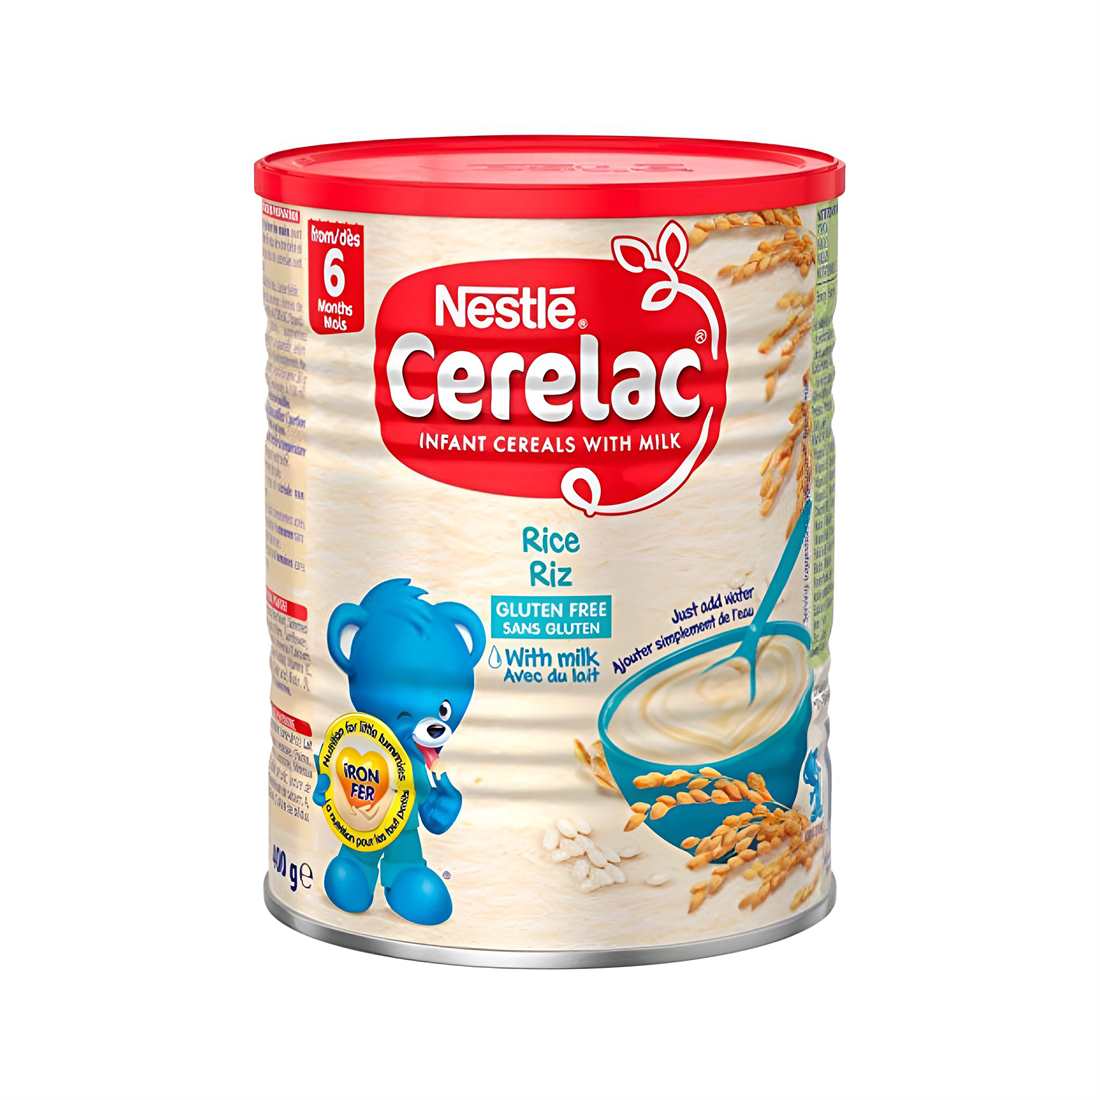 Buy Nestle Cerelac Baby Rice Riz with Milk - 400gms in India at uyyaala.com